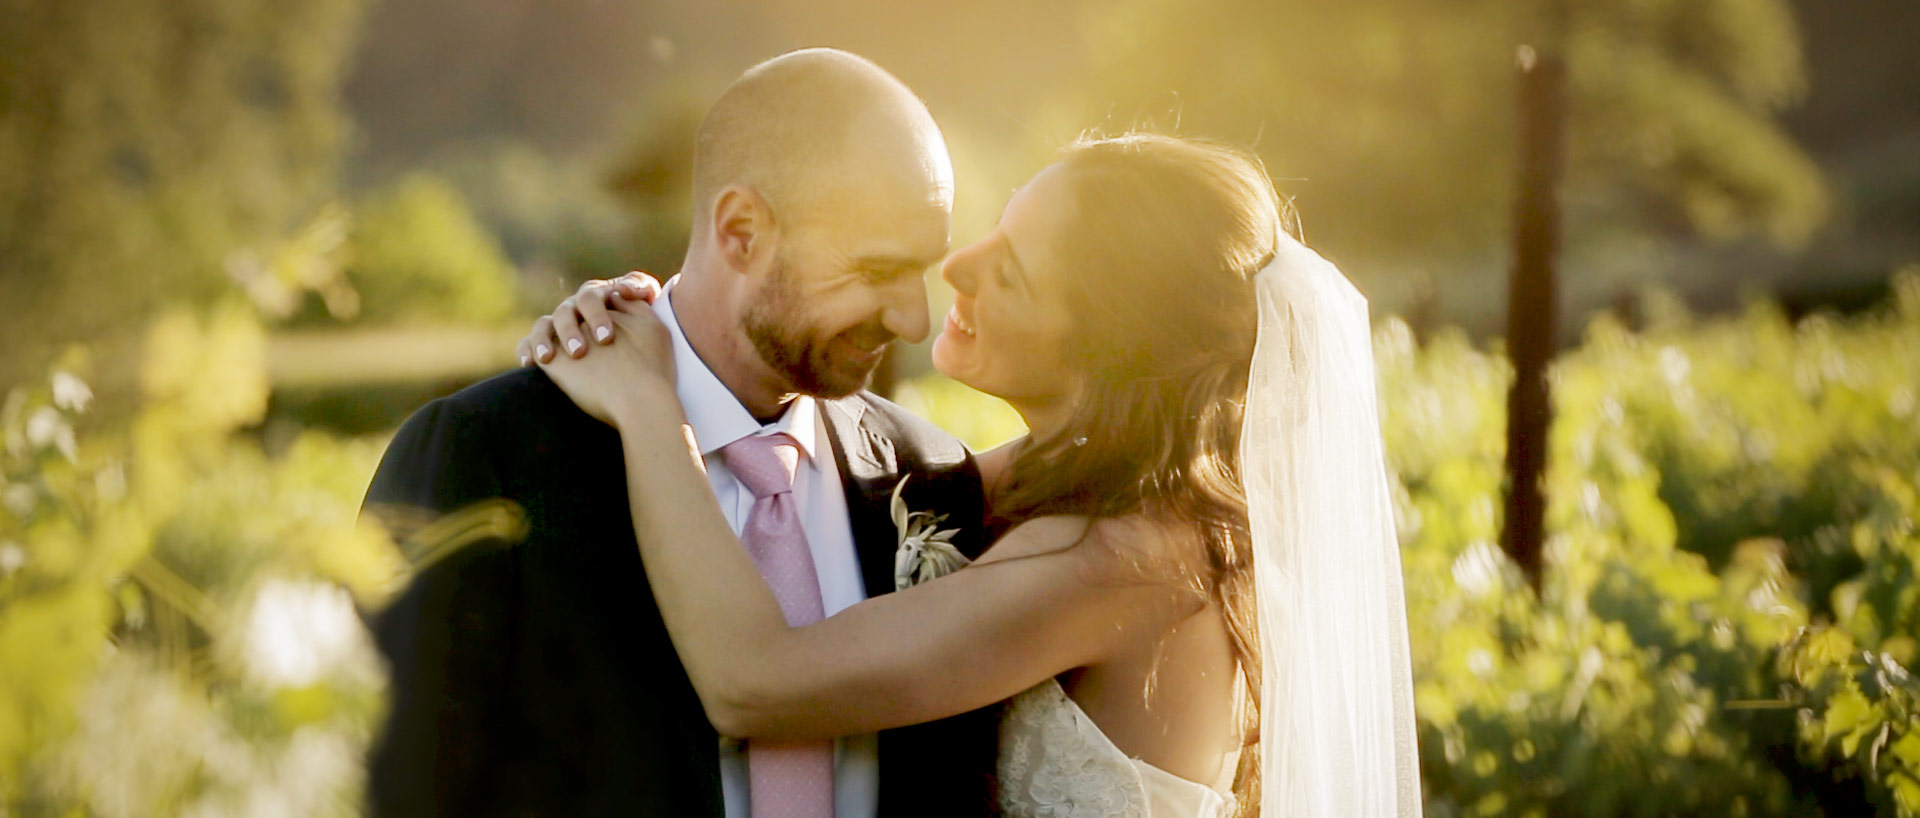 Sacramento Wedding Cinematography & Videography - Aperina Studios